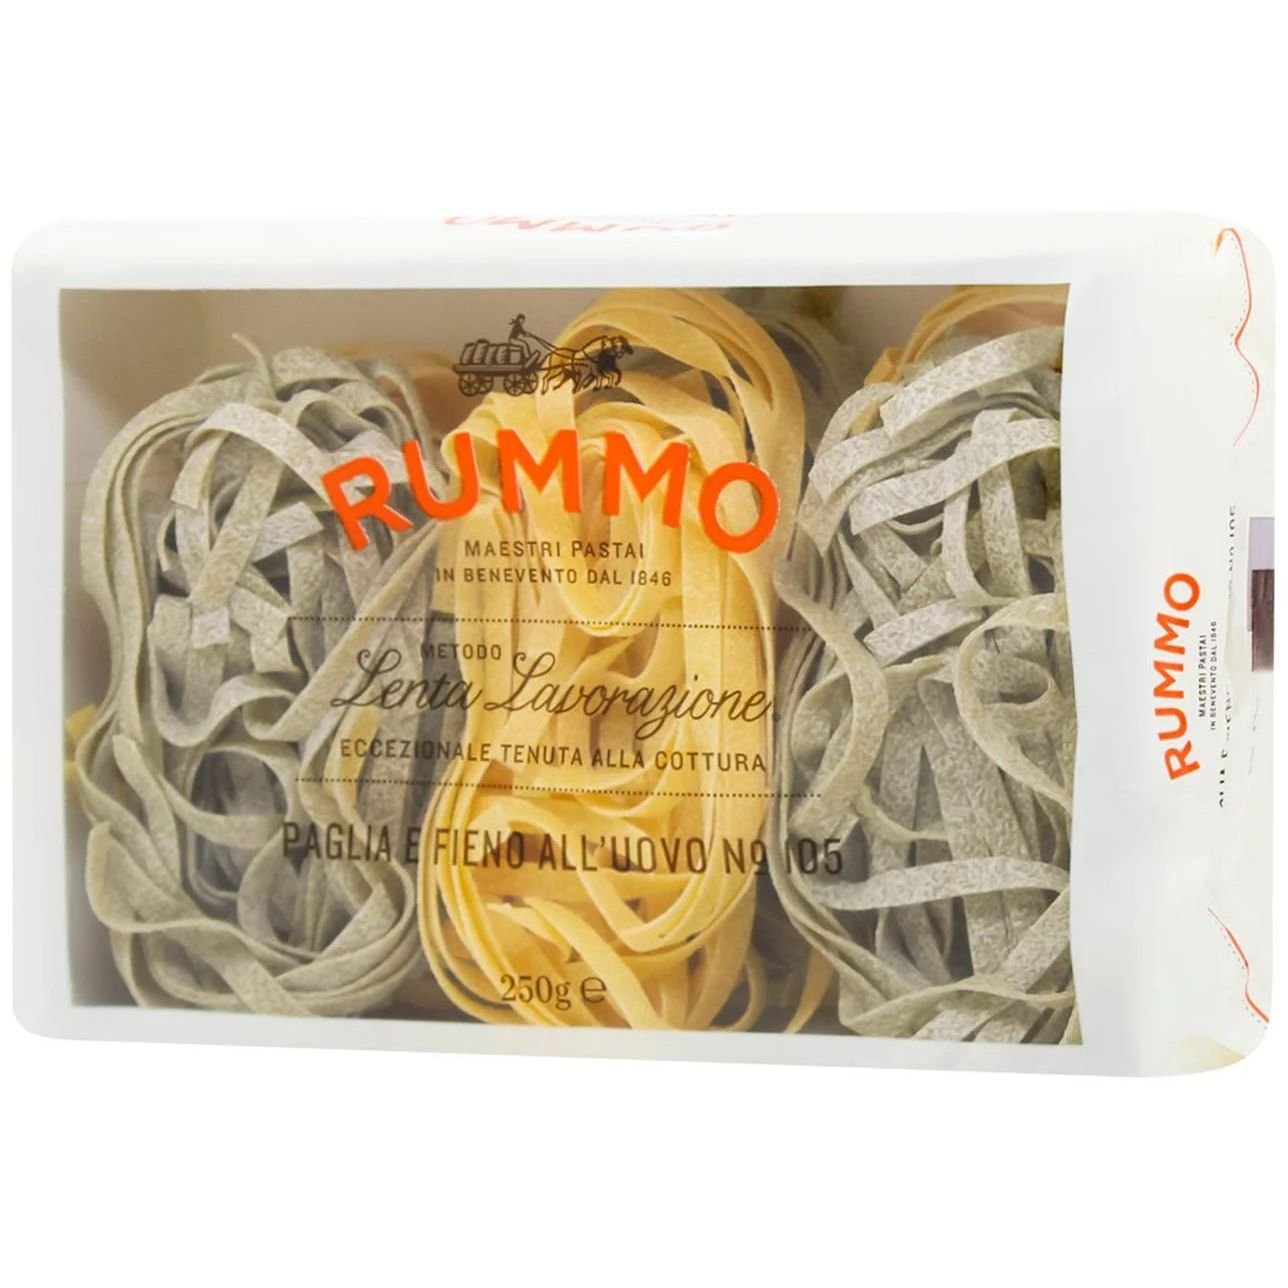 Макаронные изделия Rummo Paglia E Fieno All'uovo N°105 250 г - фото 1